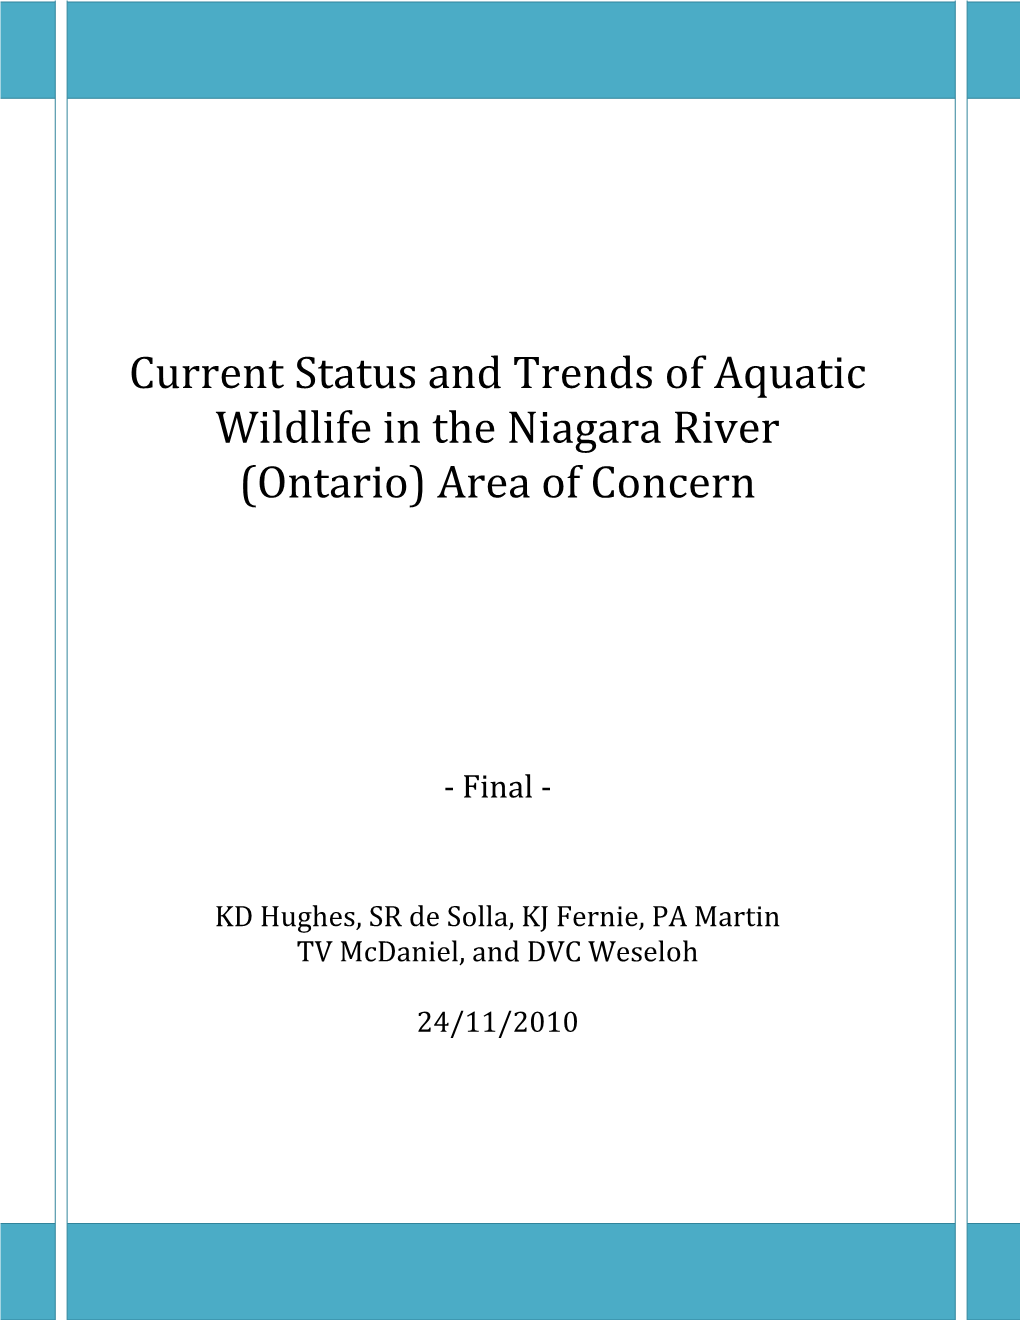 Niagara River AOC Aquatic Wildlife Status Report